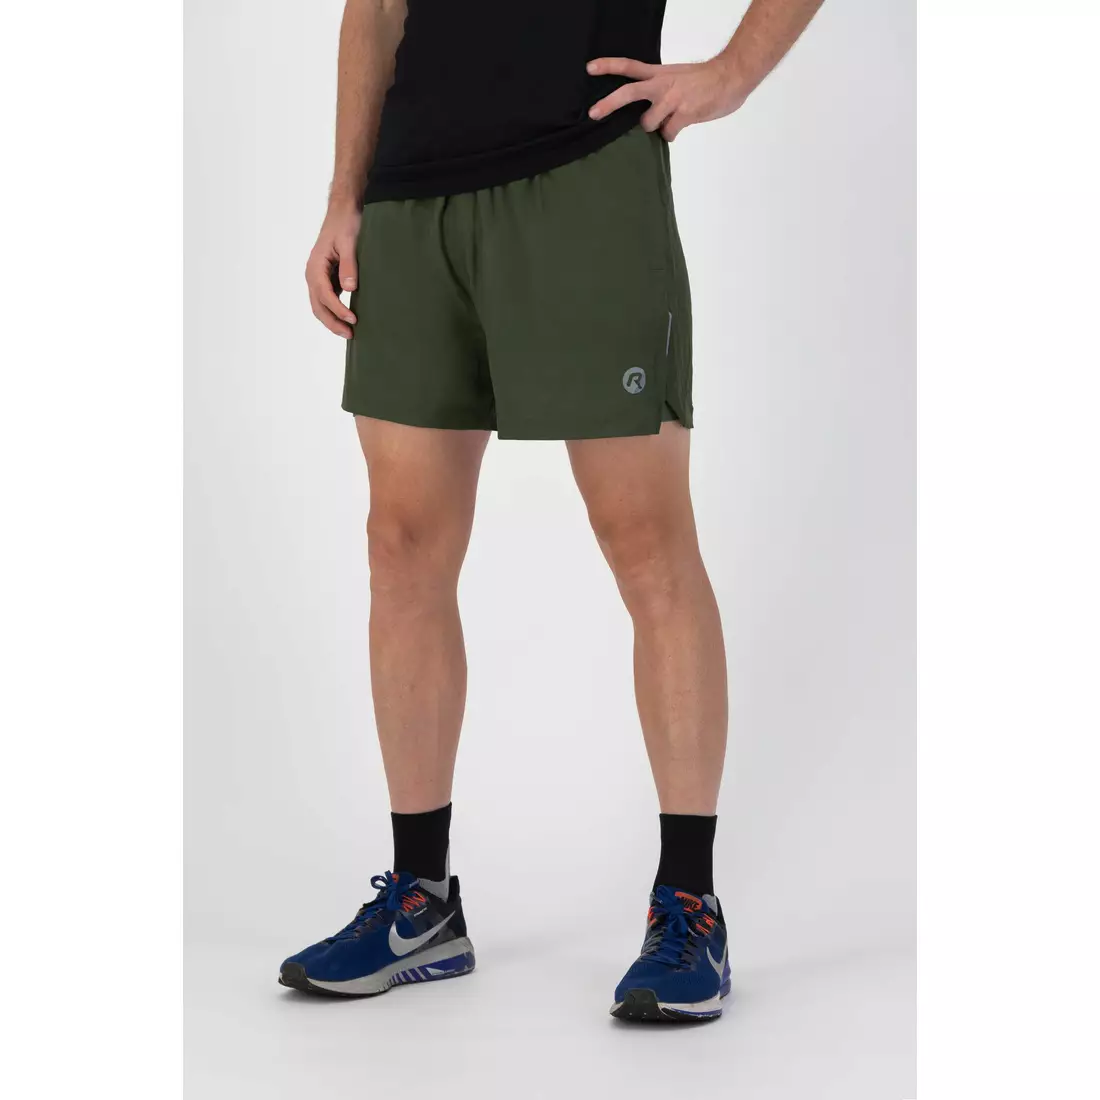 ROGELLI ESSENTIAL men's 2in1 running shorts, khaki